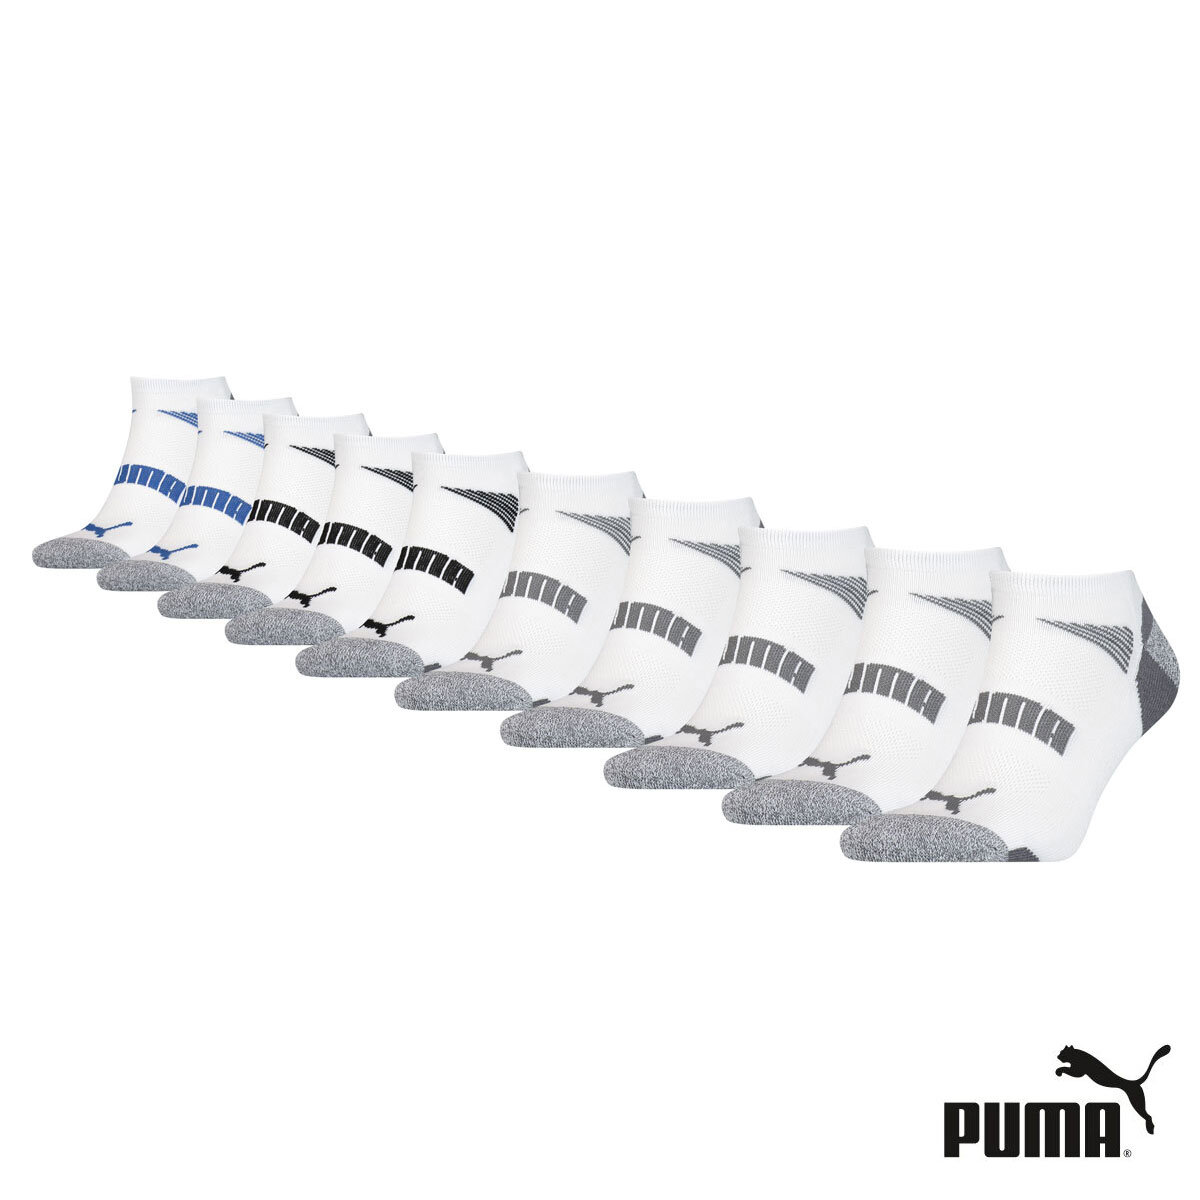 Puma Men's Trainer Sock 10 Pack in White